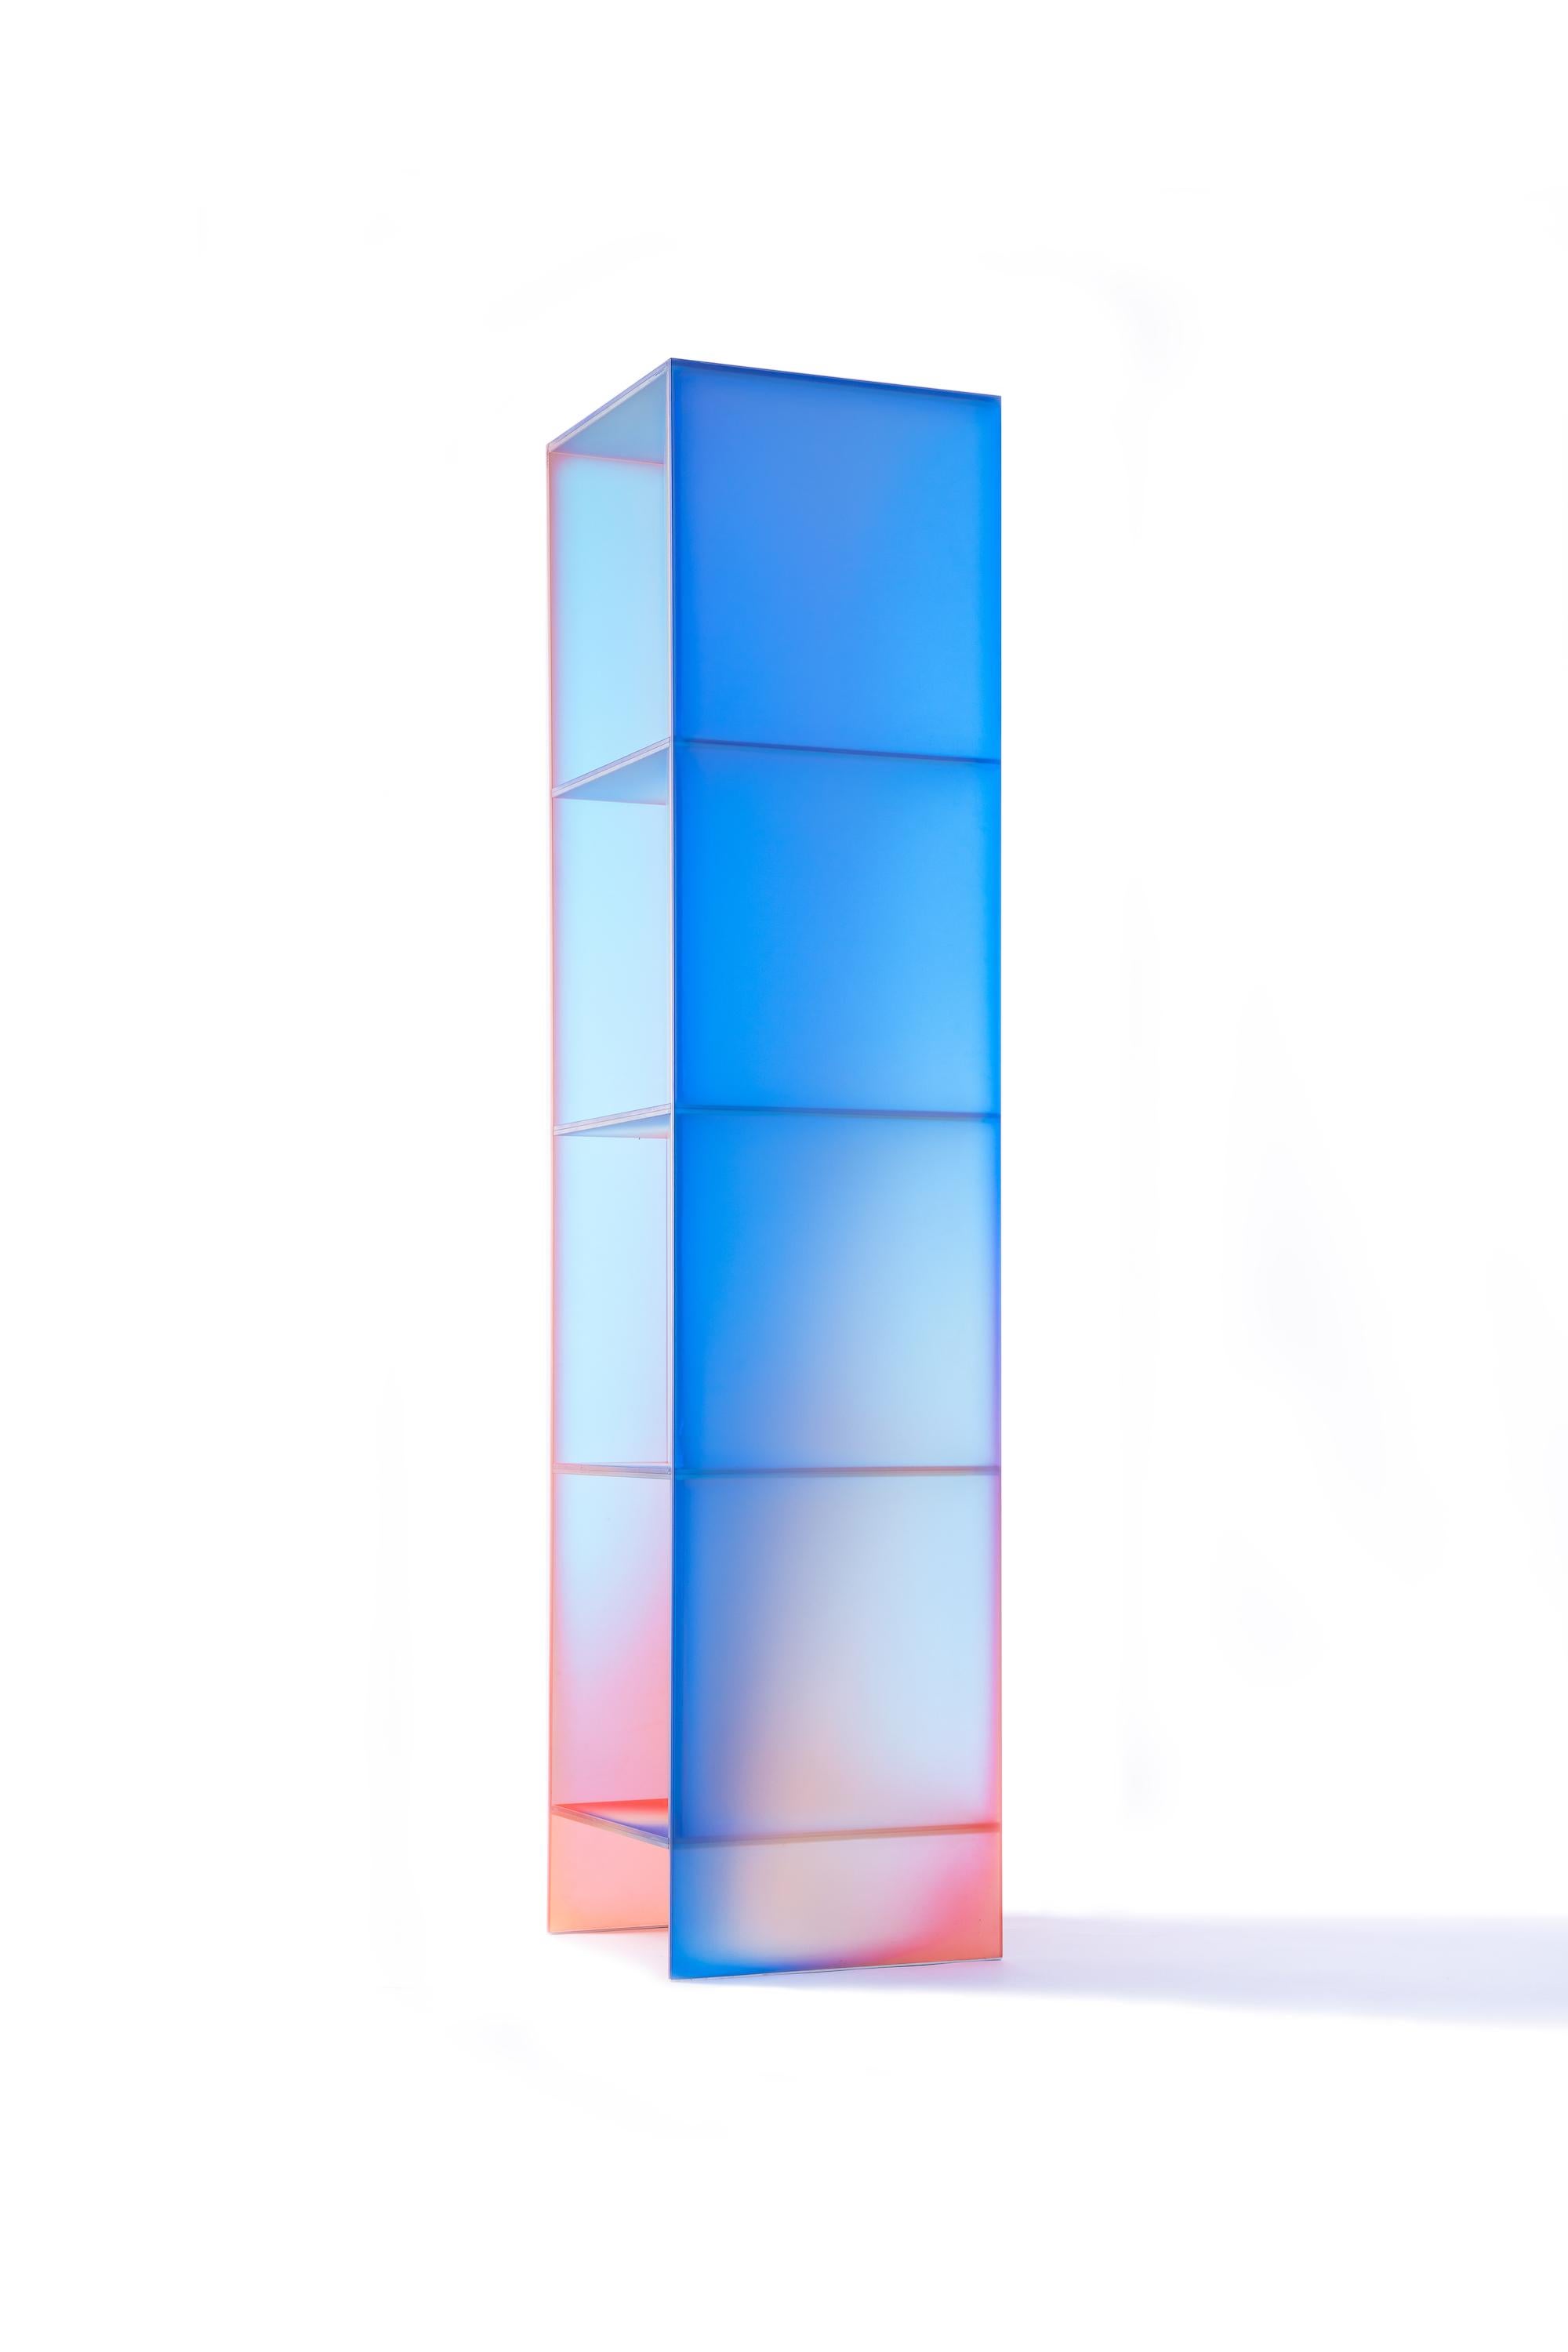 Contemporary Gradient Color Glass Display Unit by Studio Buzao